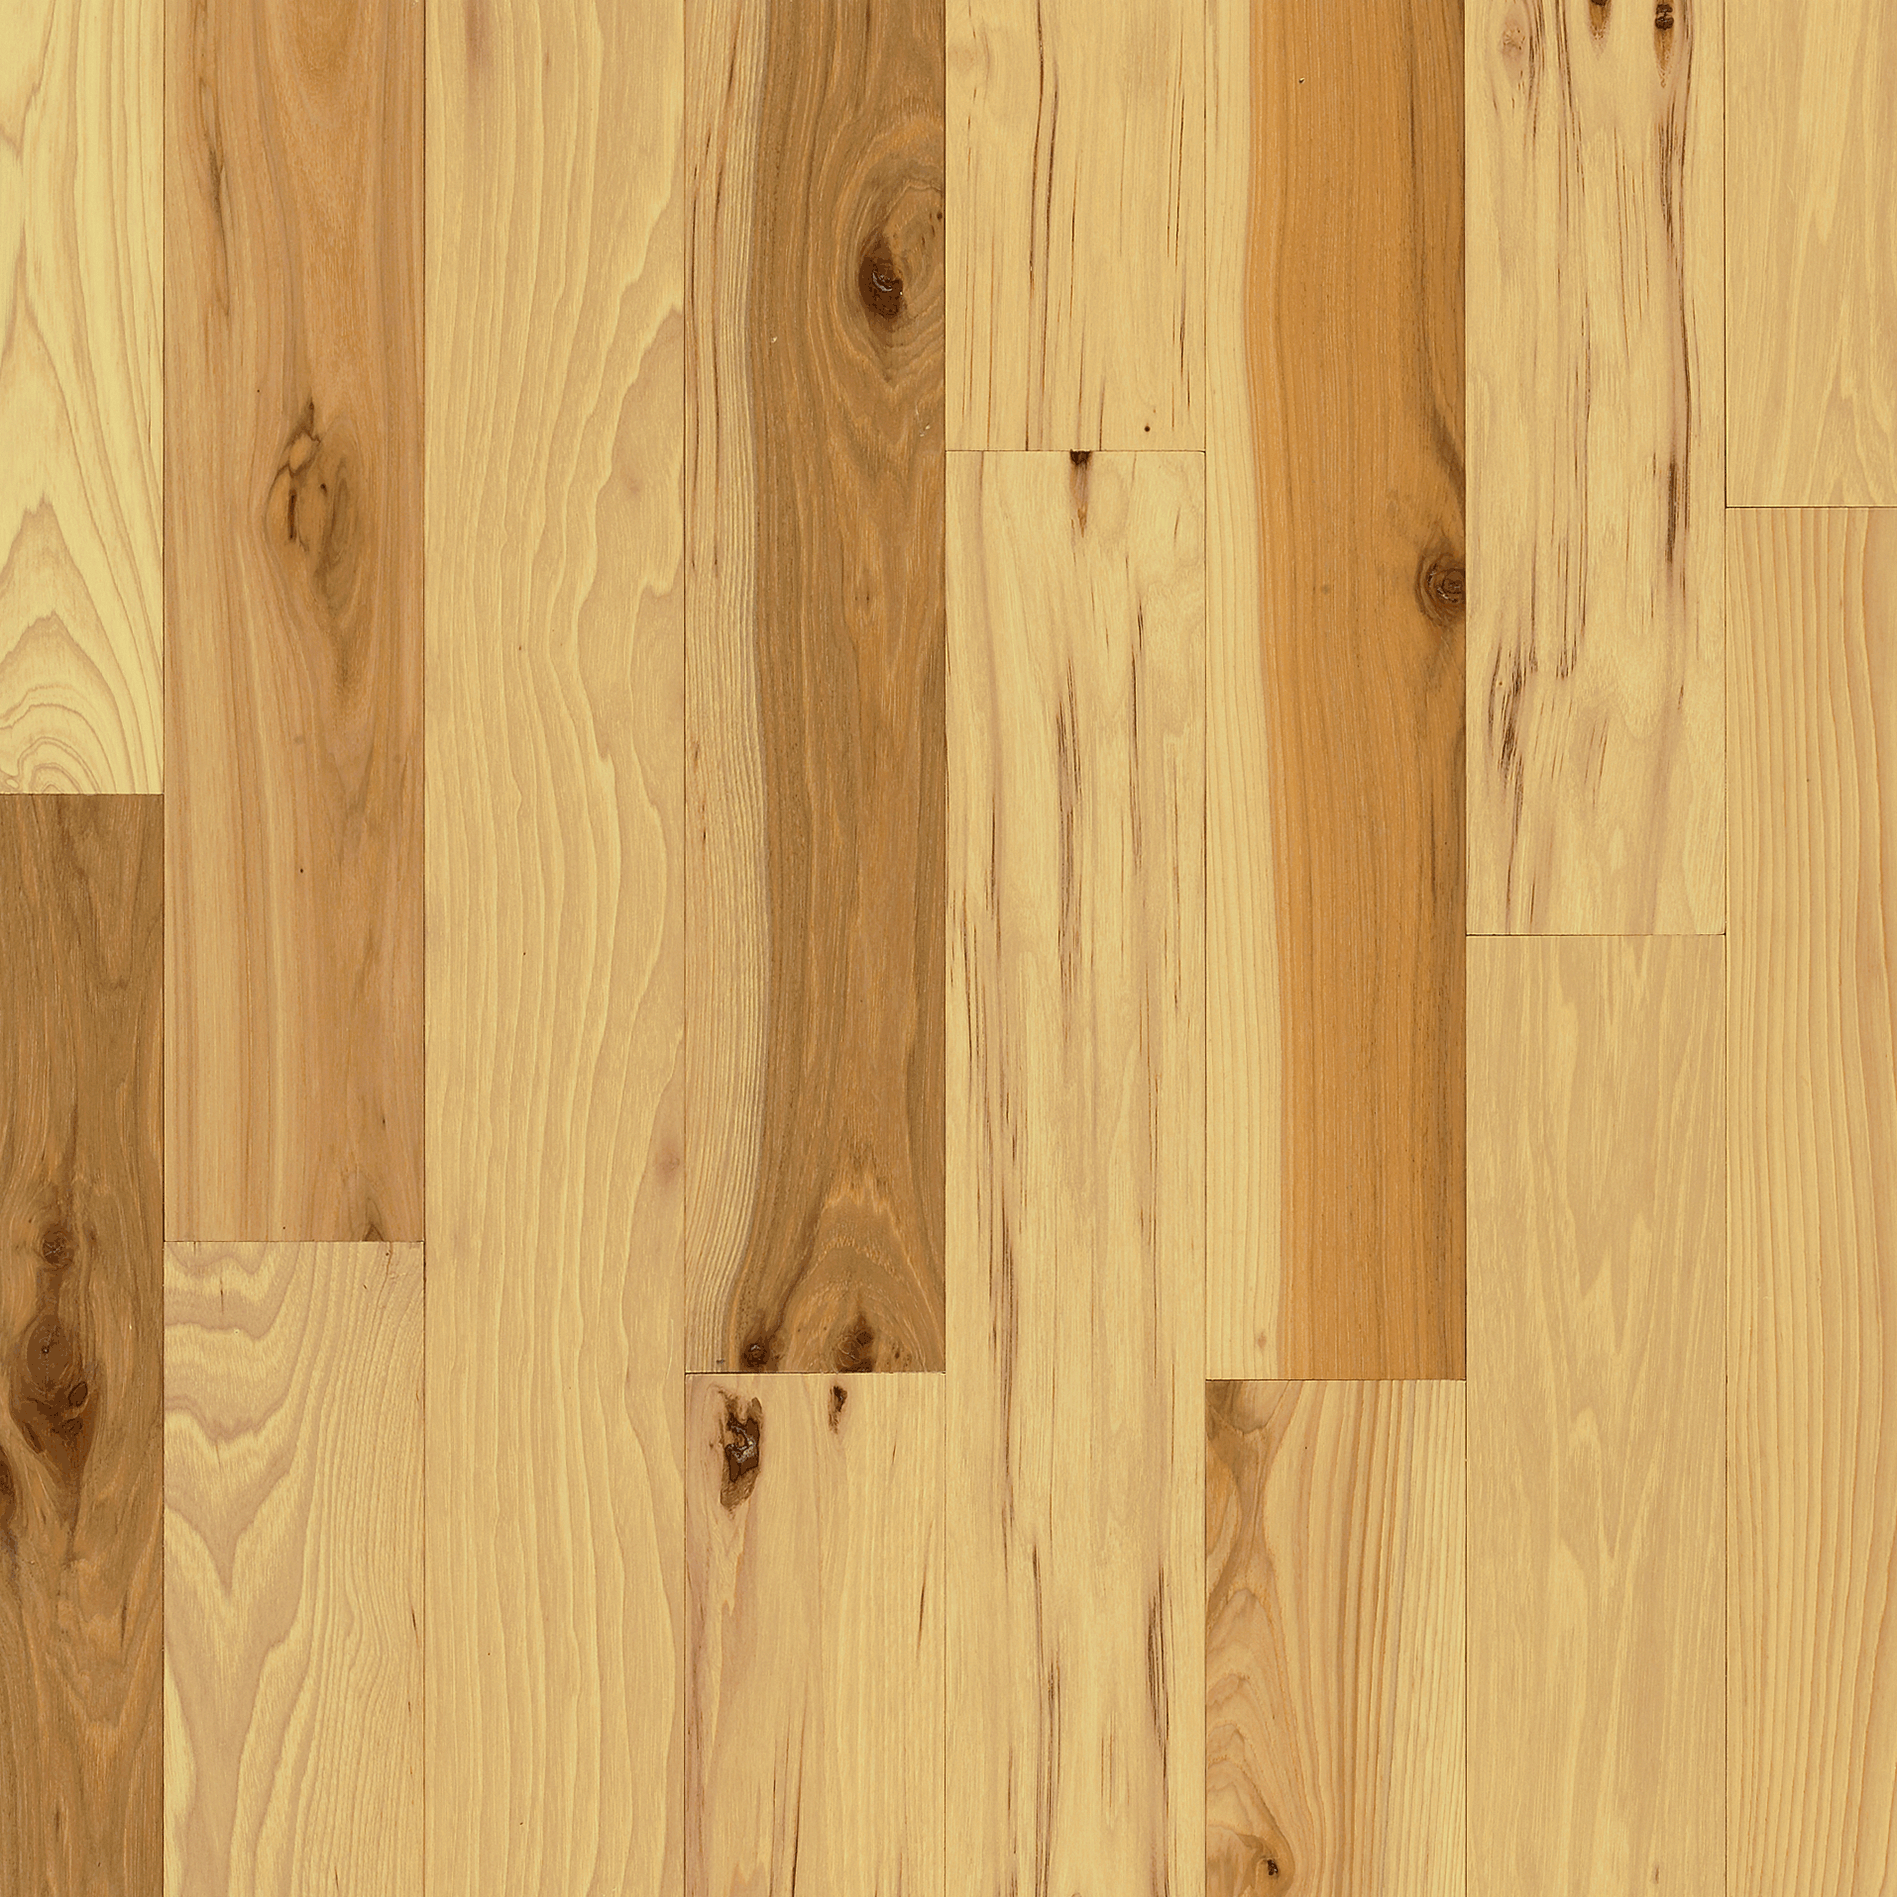 Hickory Hardwood flooring in Rockville from Alladin Carpet and Floors